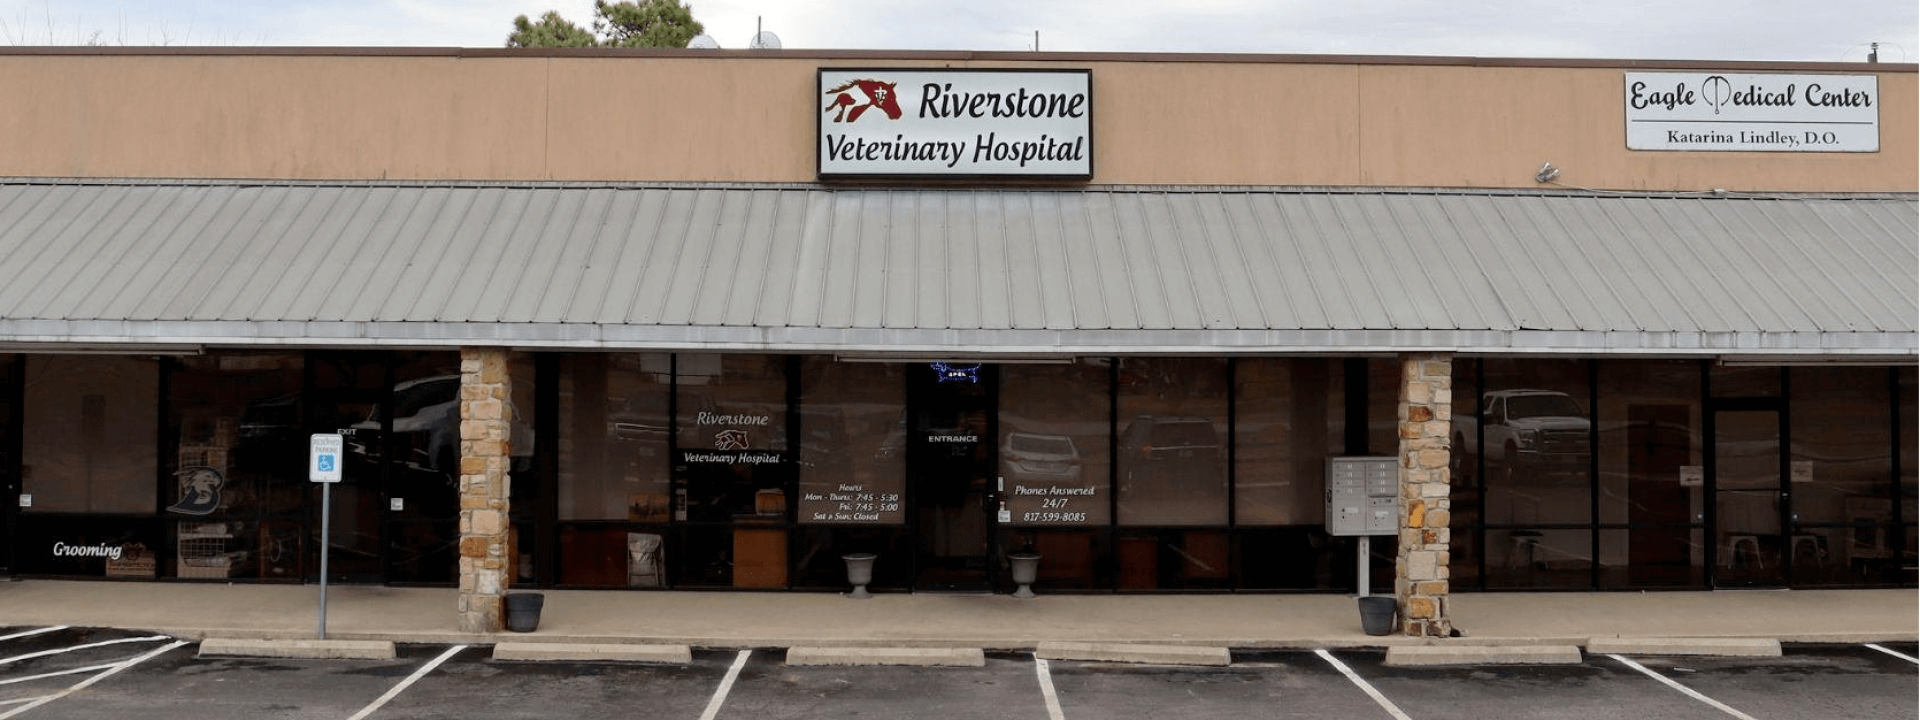 Riverstone Veterinary Hospital | Riverstone Veterinary Group